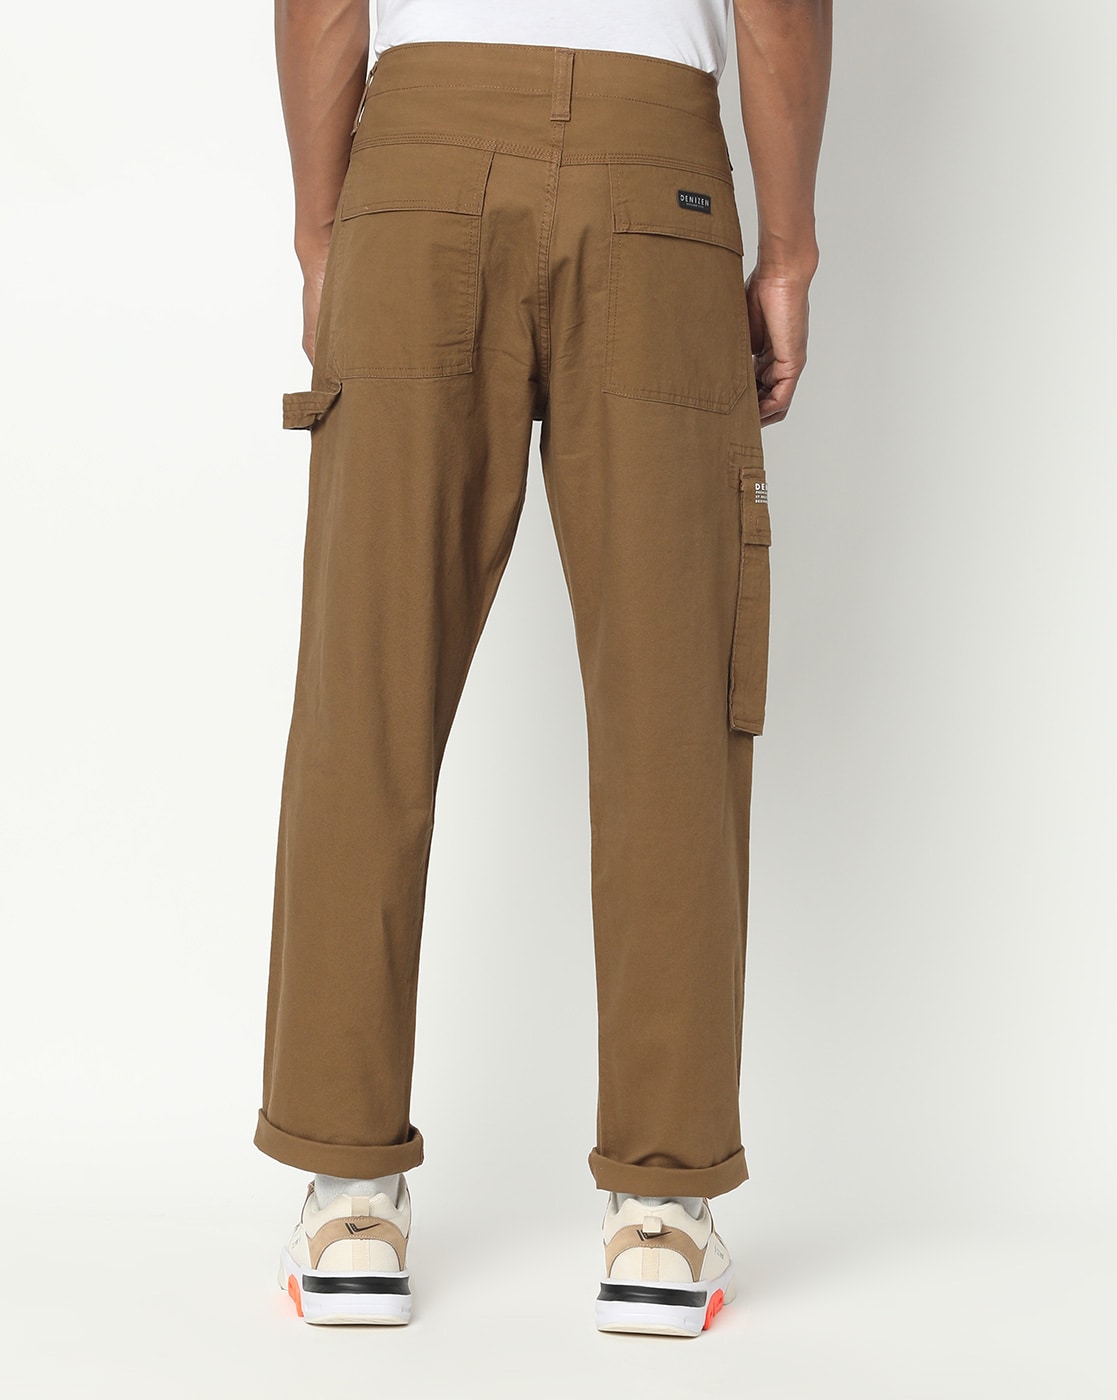 Buy Brown Trousers  Pants for Men by DENIZEN FROM LEVIS Online  Ajiocom